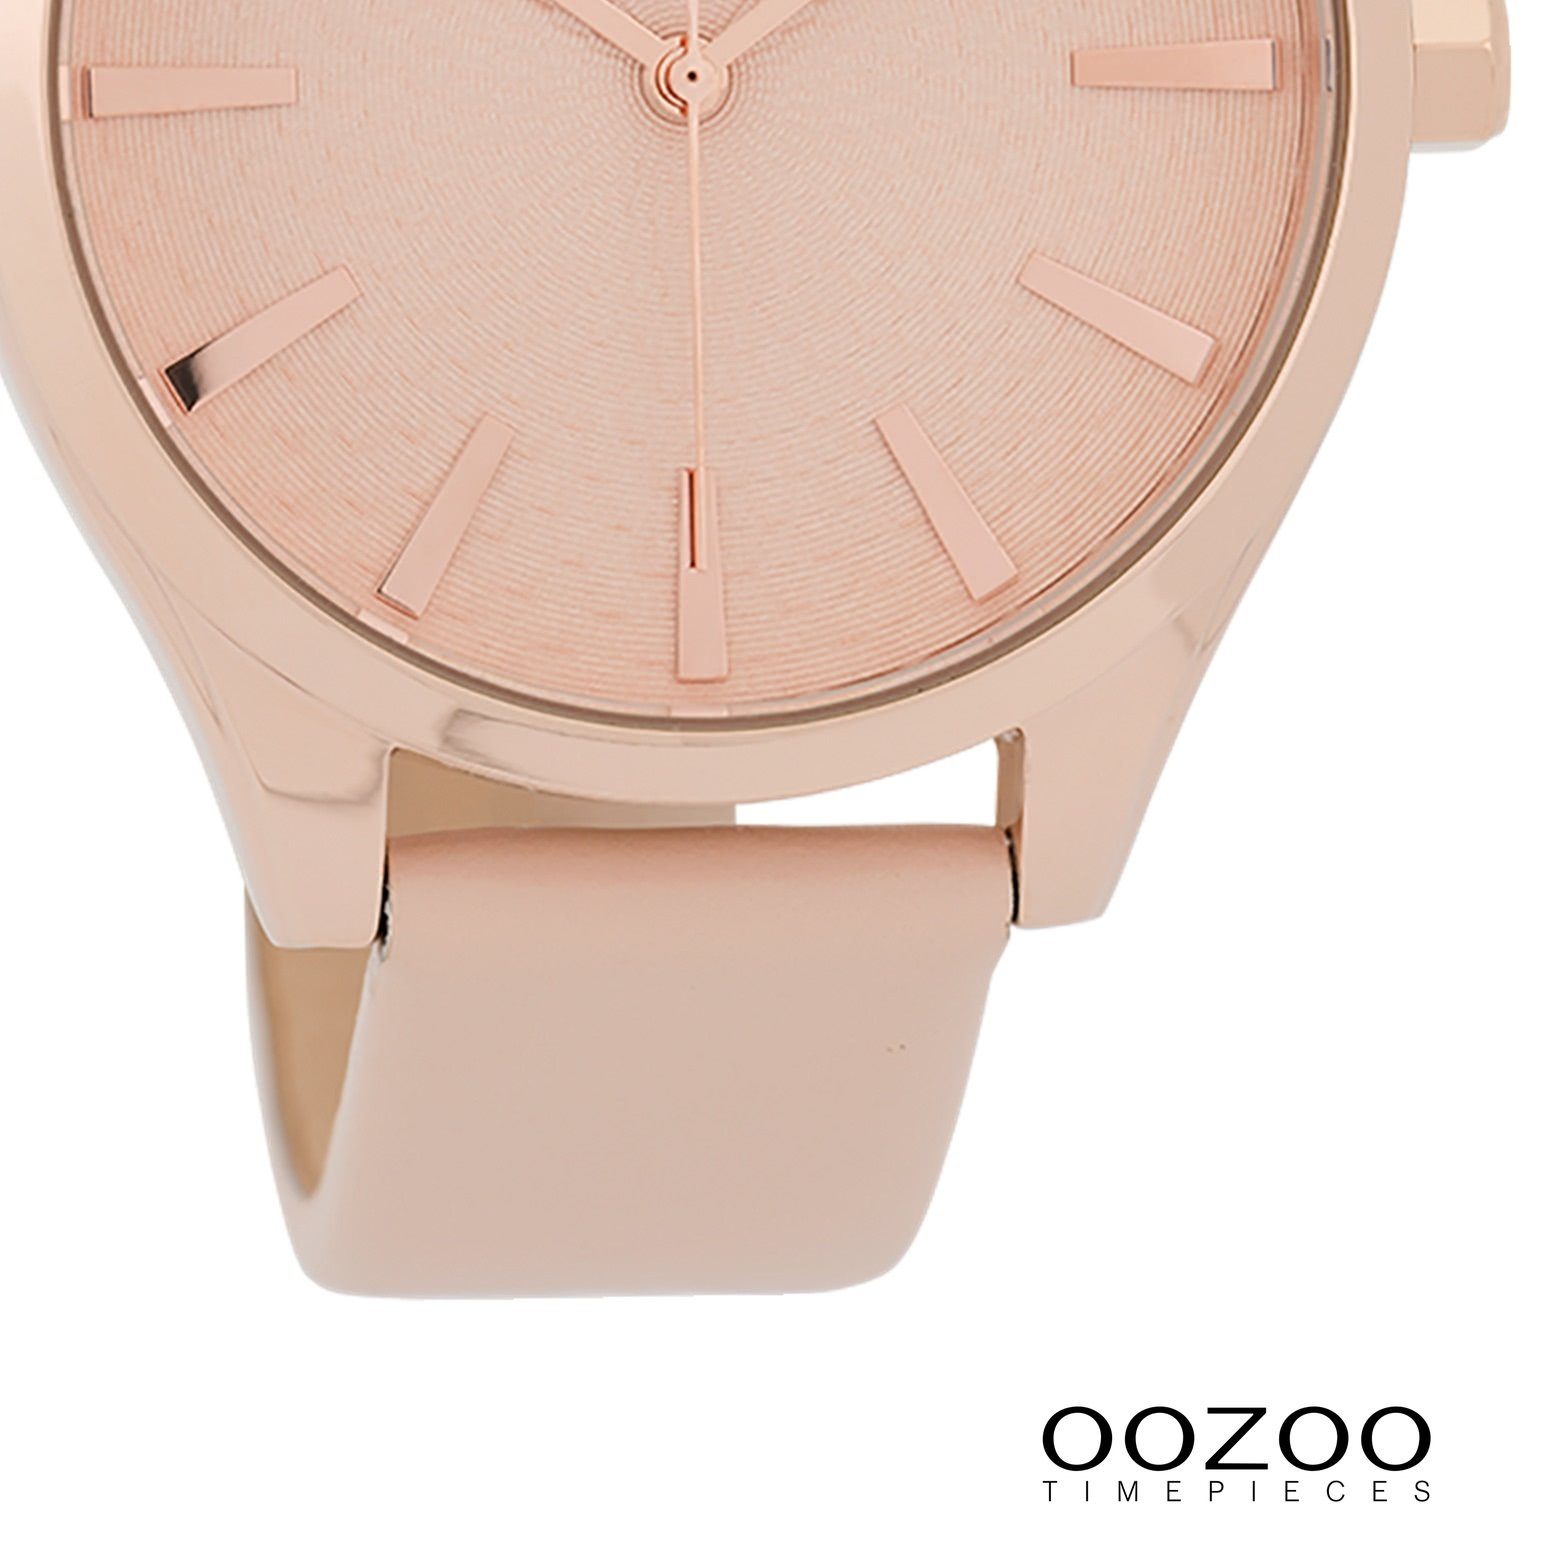 OOZOO Quarzuhr Armbanduhr Fashion rosa, Timepieces, Damen Damenuhr rund, 42mm), Oozoo (ca. Lederarmband groß